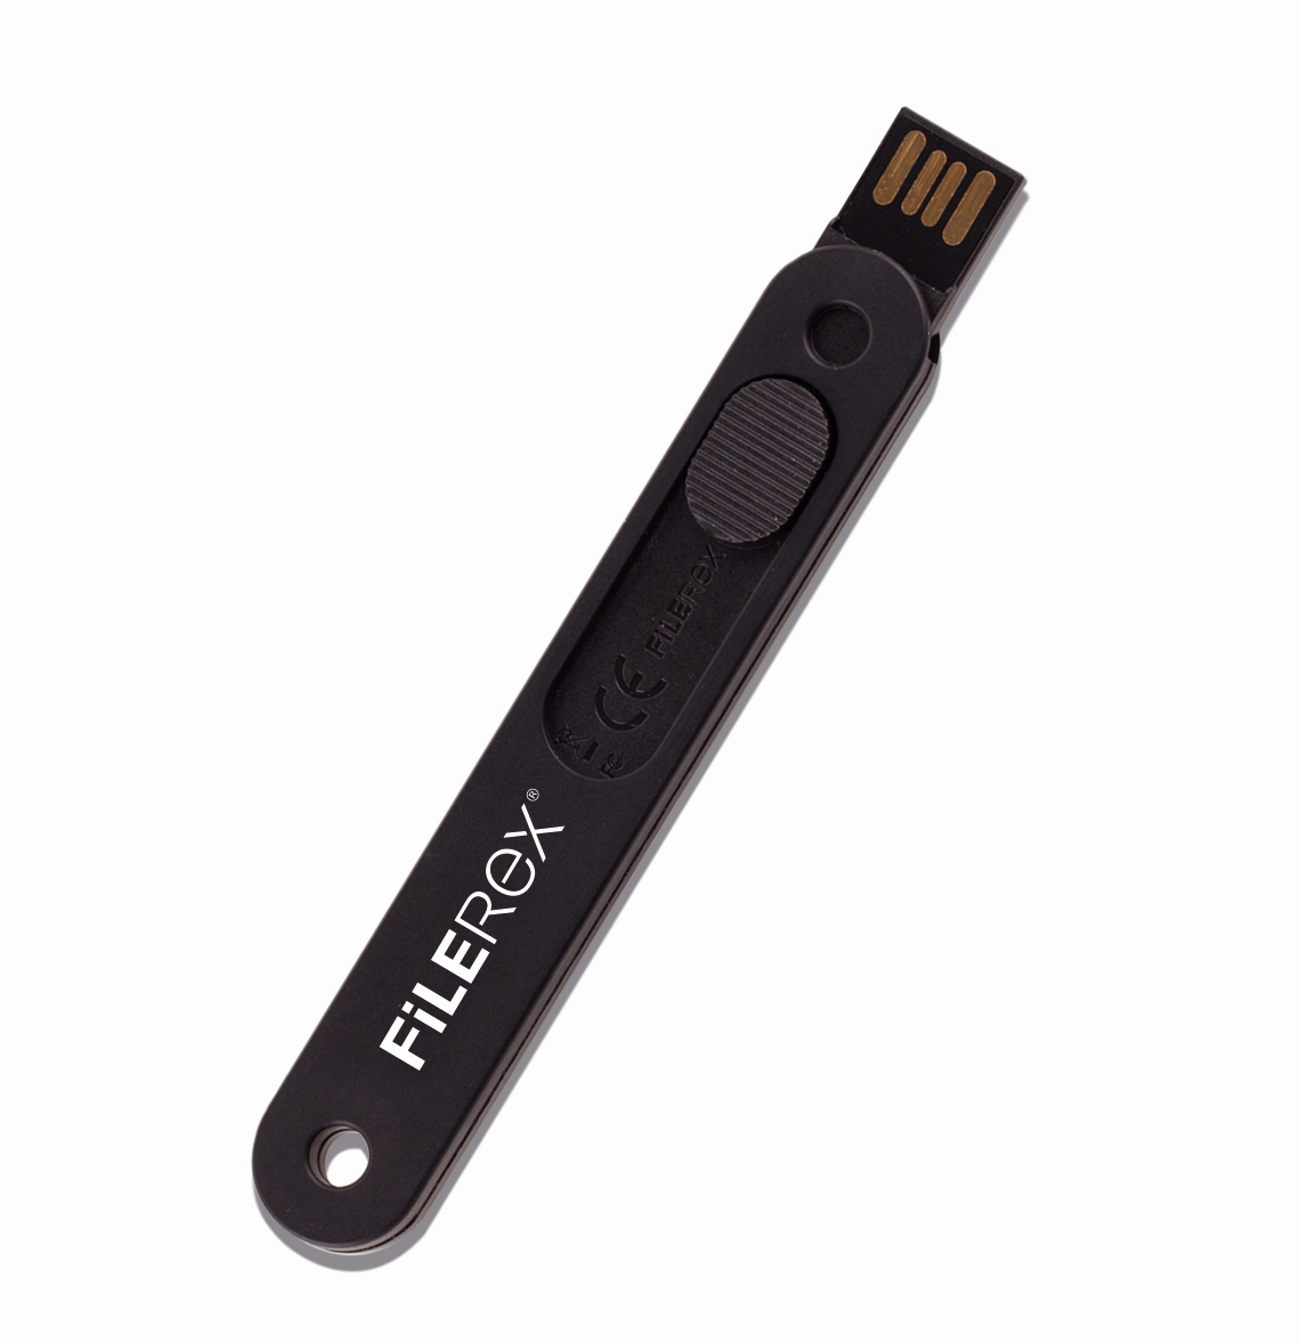 FILEREX 16GB - BlackE Original - (Black) FiLEREX USB-Stick / GB) #GEN2 Black, (Black 16 2.0